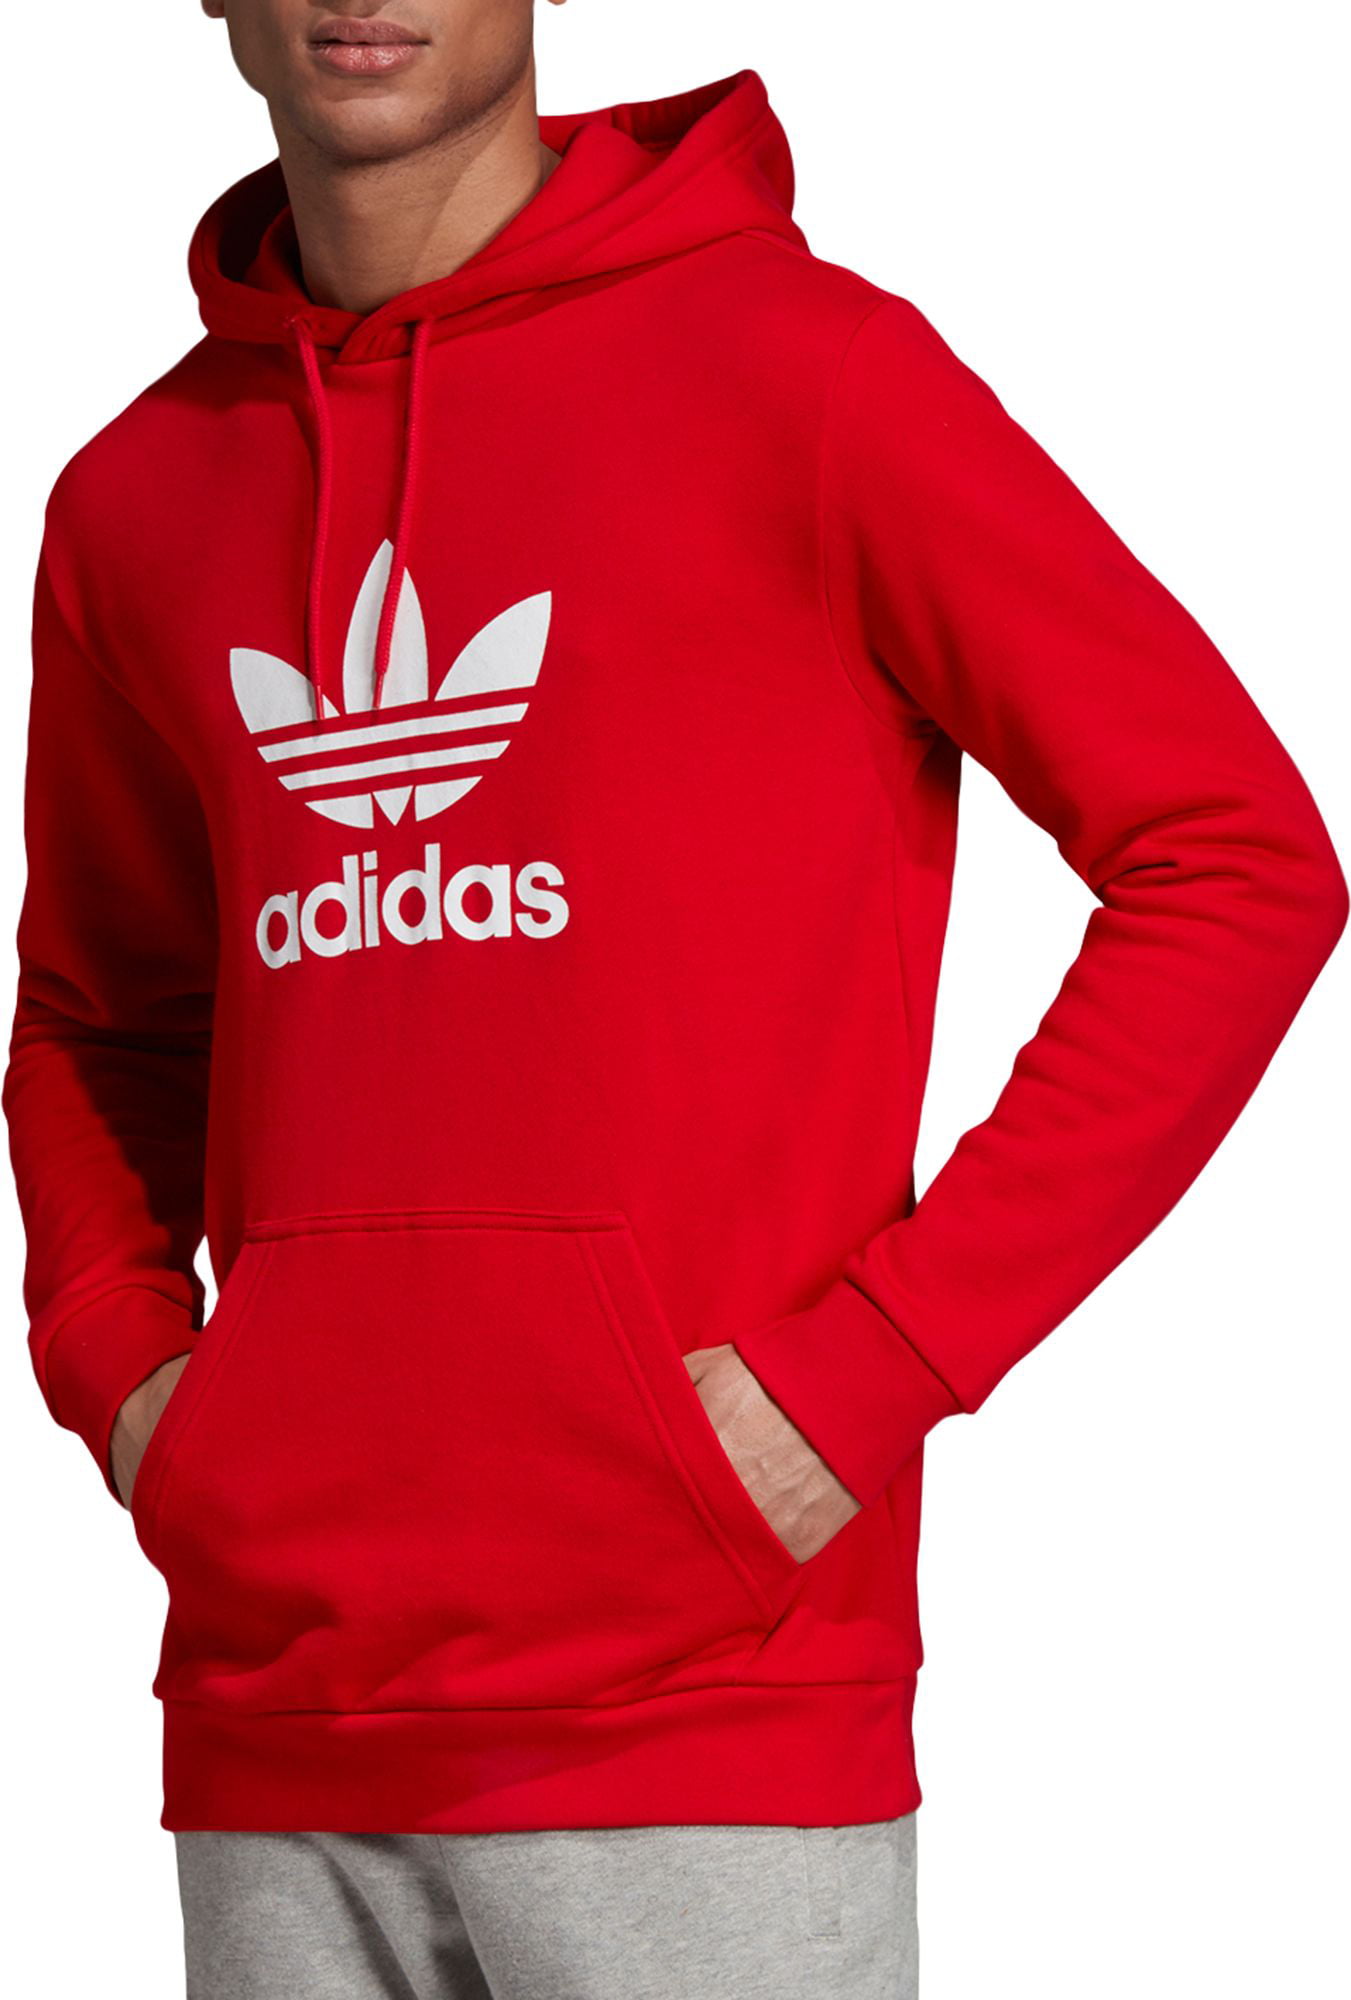 Adidas - adidas Originals Men's Trefoil Warm-Up Hoodie - Walmart.com ...